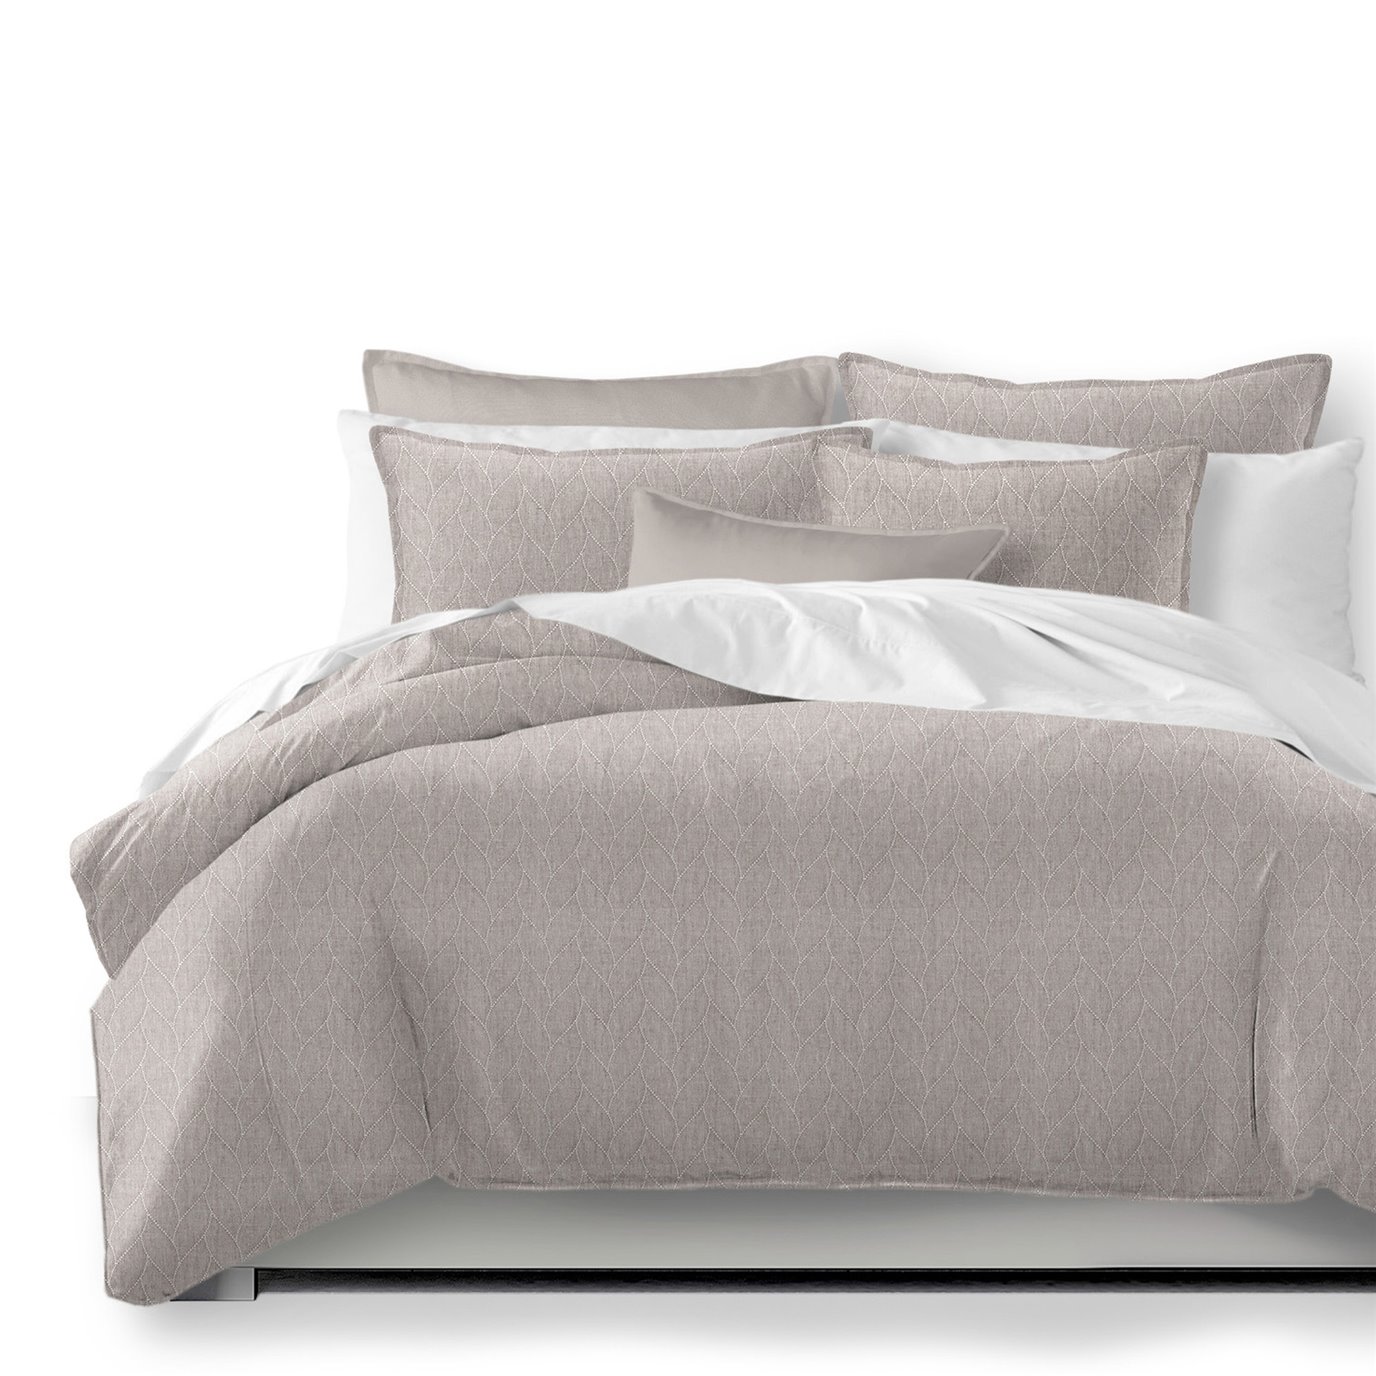 Zickwood Ecru Comforter and Pillow Sham(s) Set - Size Super Queen